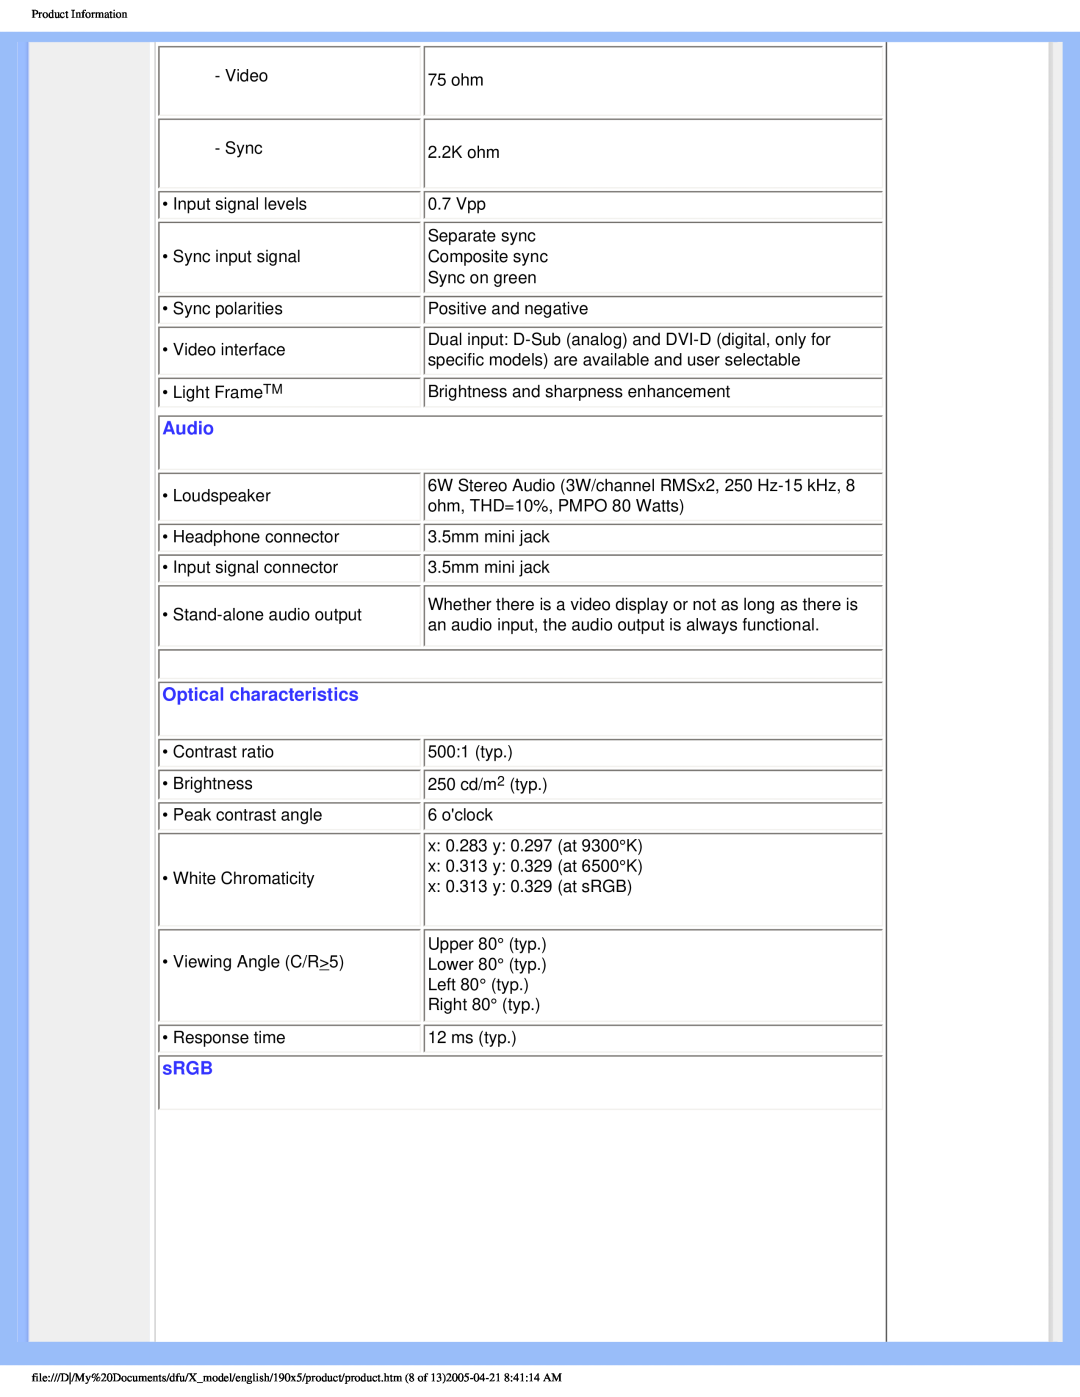 Philips 190X5 user manual Audio, Optical characteristics, sRGB 